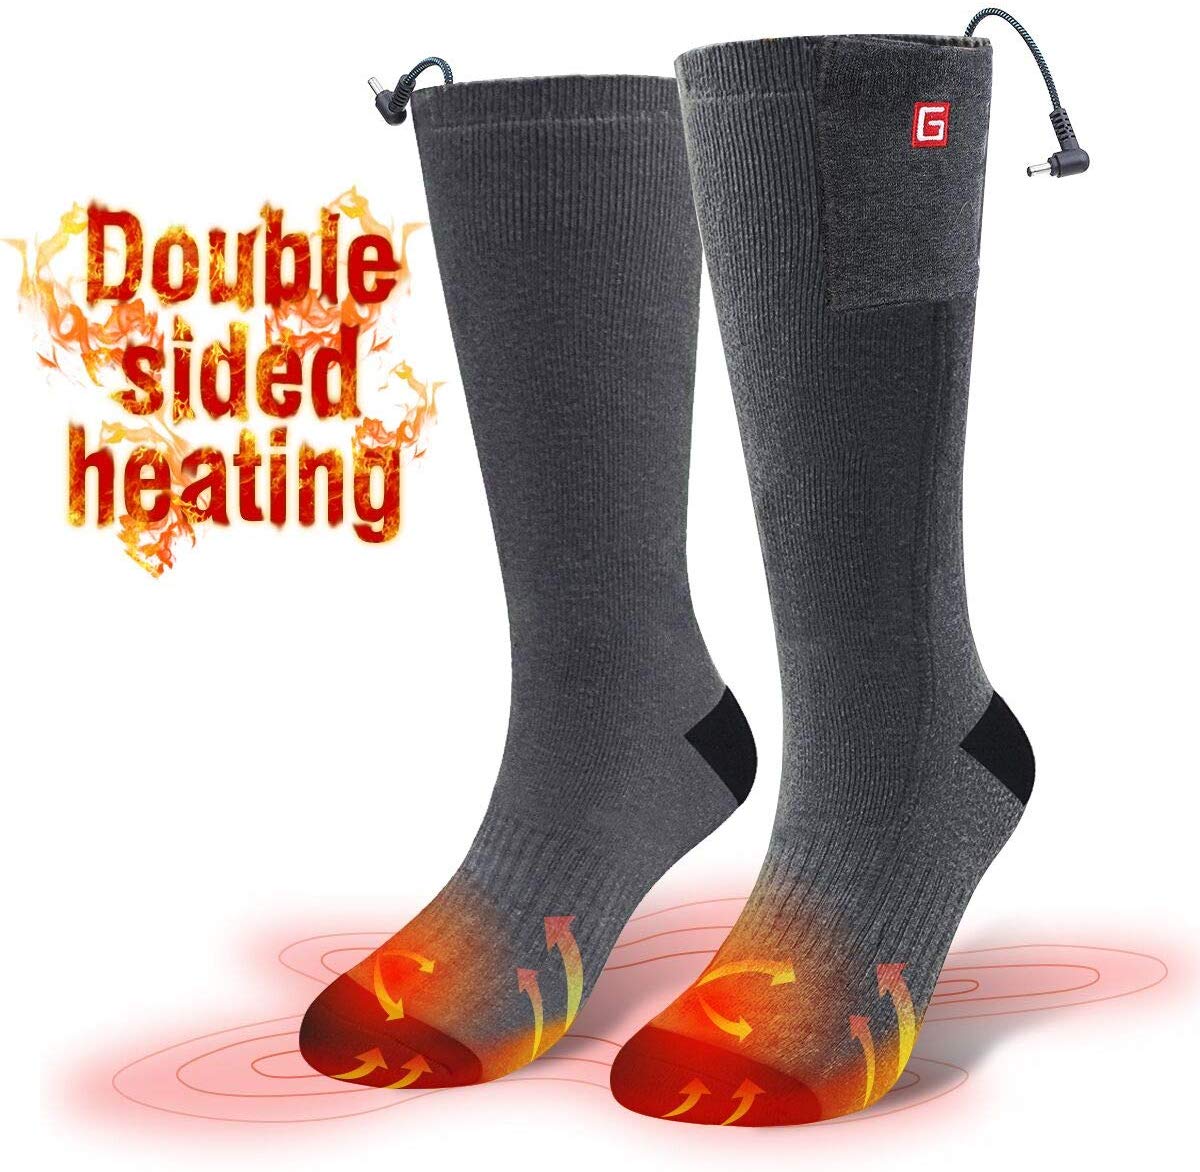 Electric Heated Socks Foot Winter Warmer Rechargable Battery Sock Winter Sports 